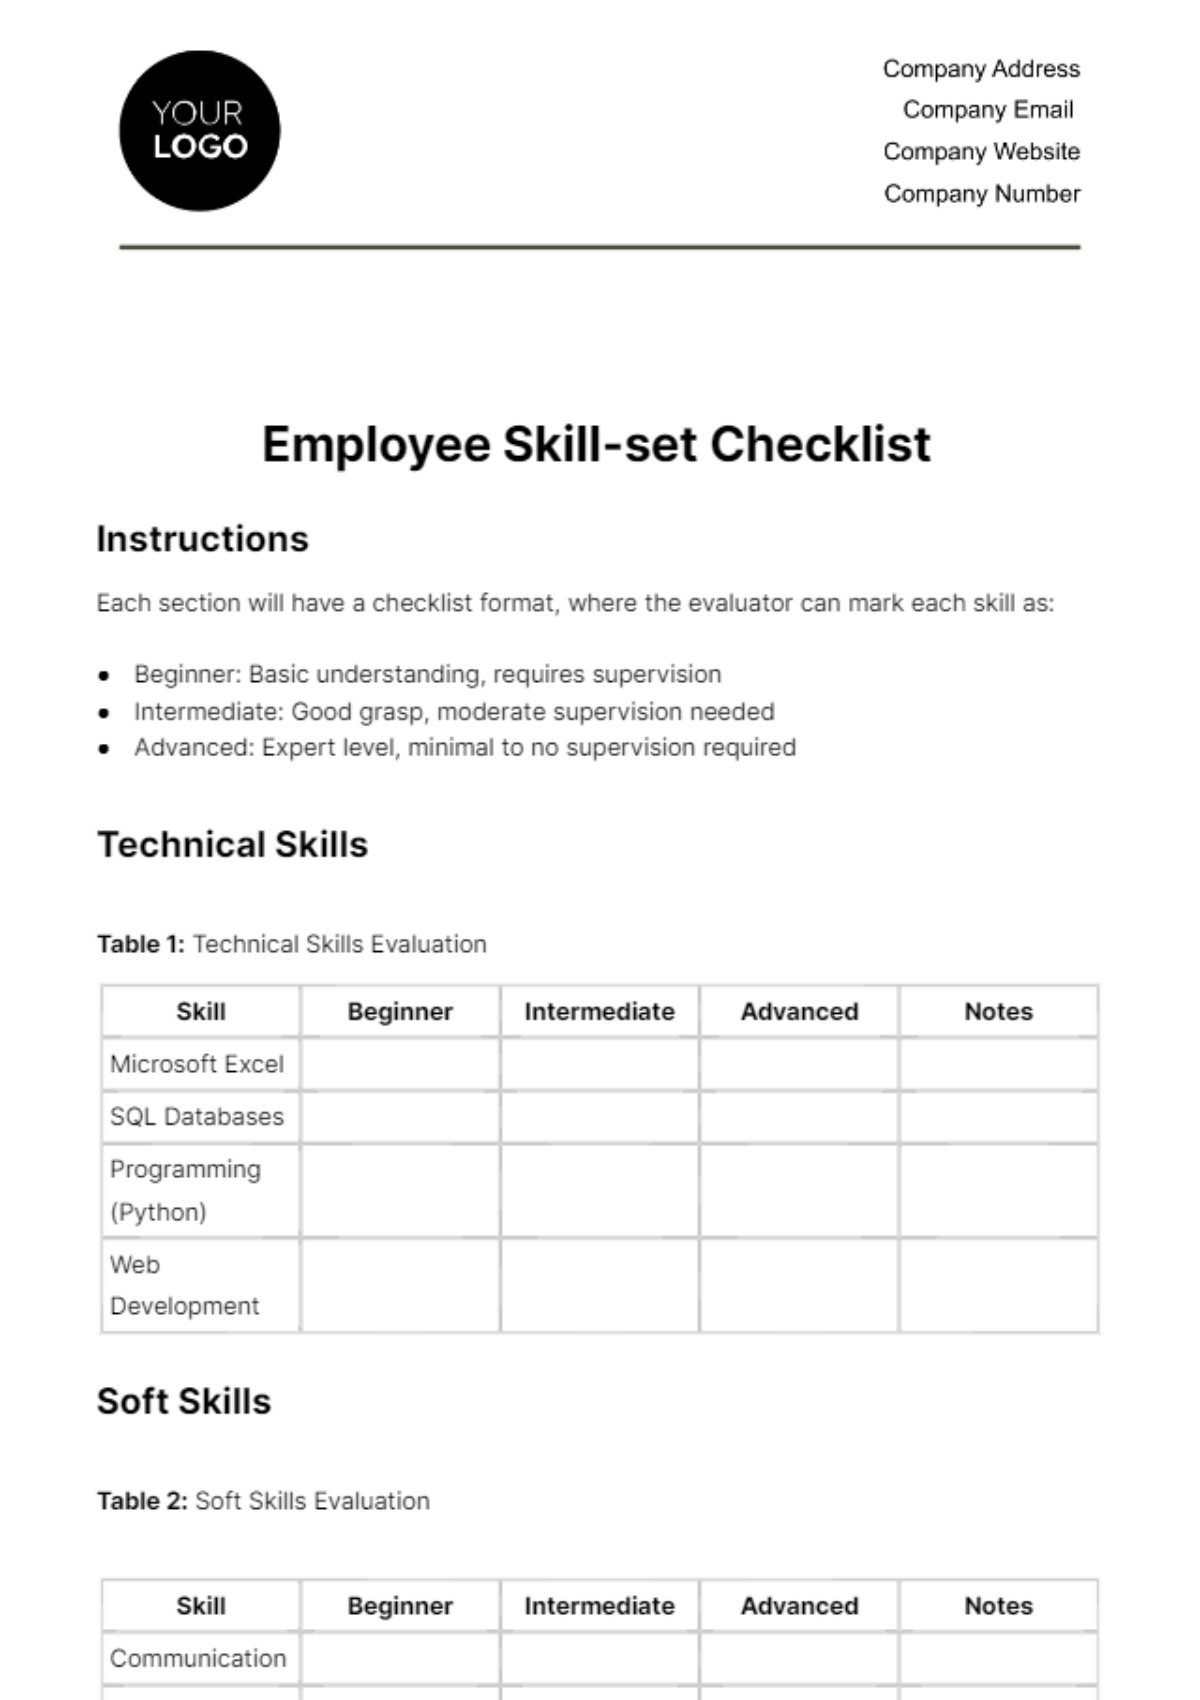 Free Employee Skill-set Checklist HR Template